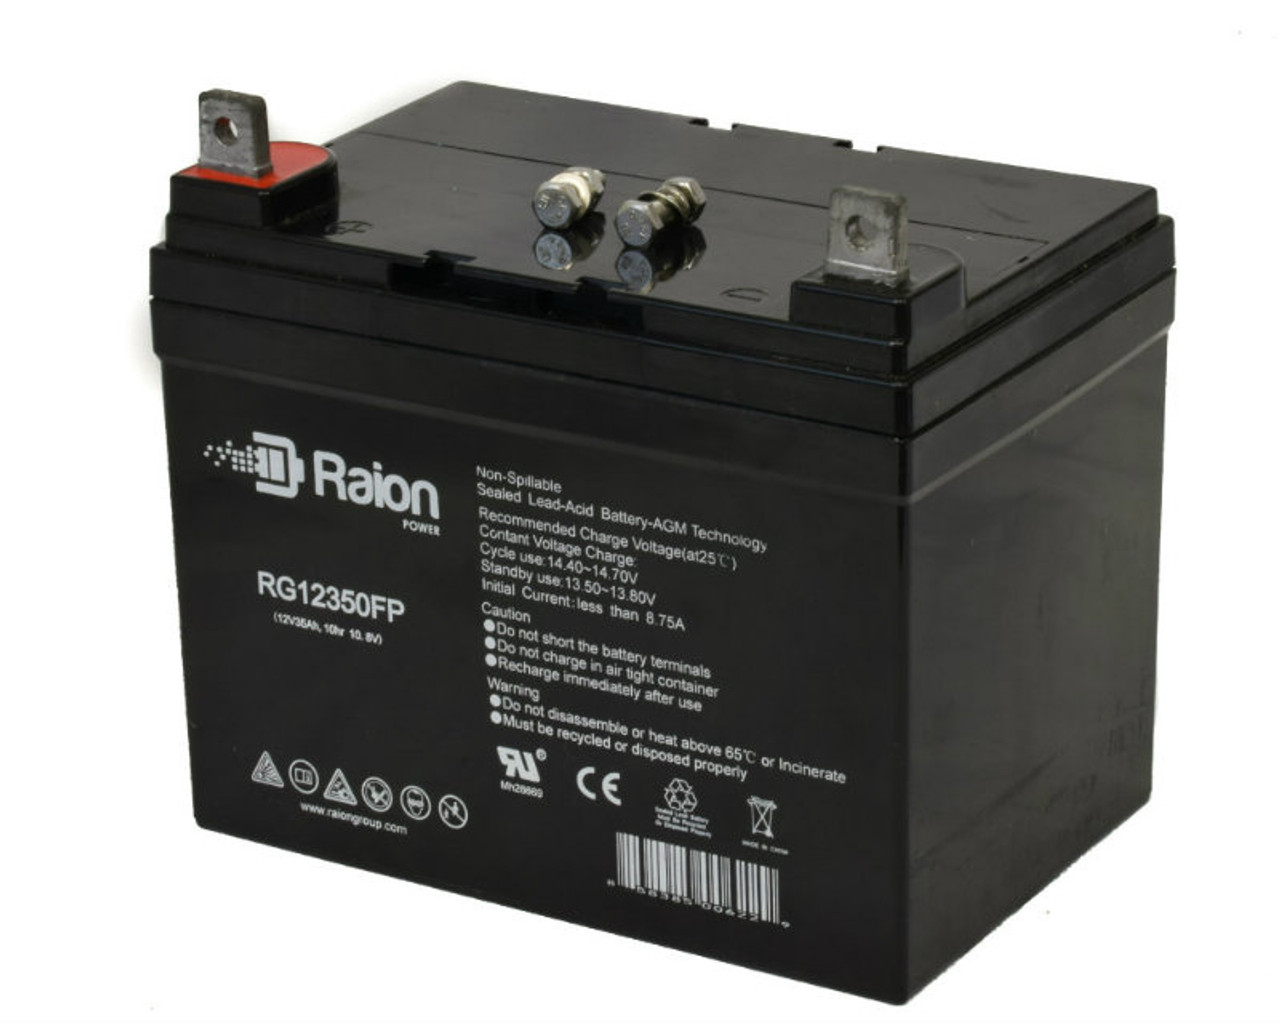 Raion Power Replacement 12V 35Ah RG12350FP Battery for Hustler 2500